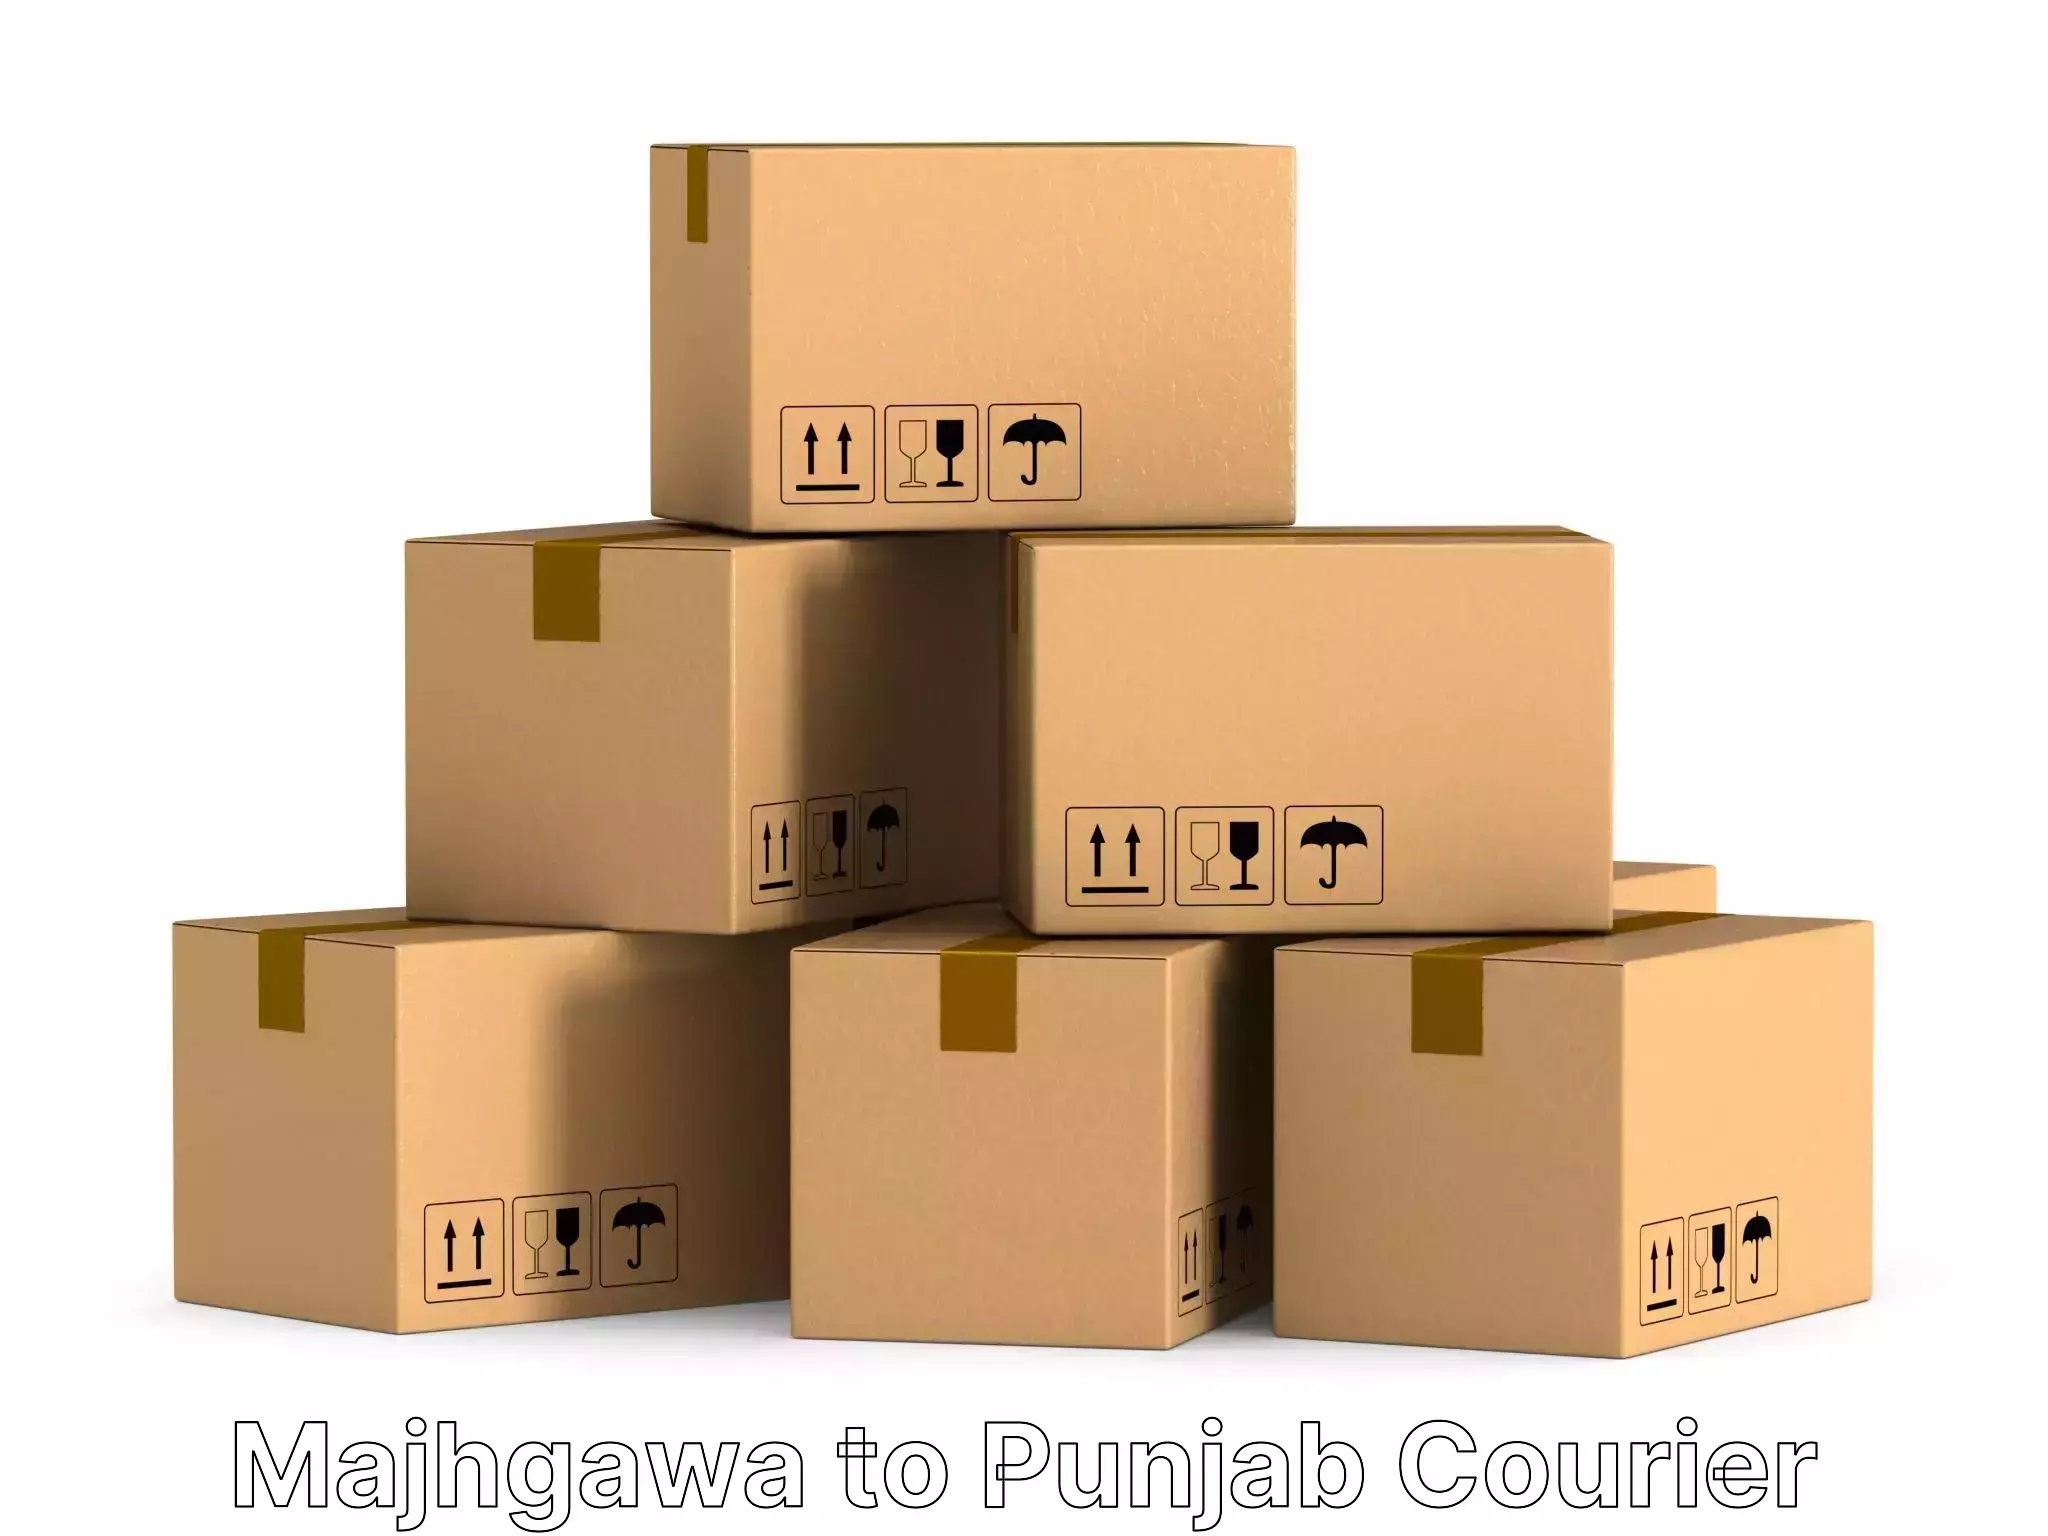 Moving and packing experts Majhgawa to Punjab